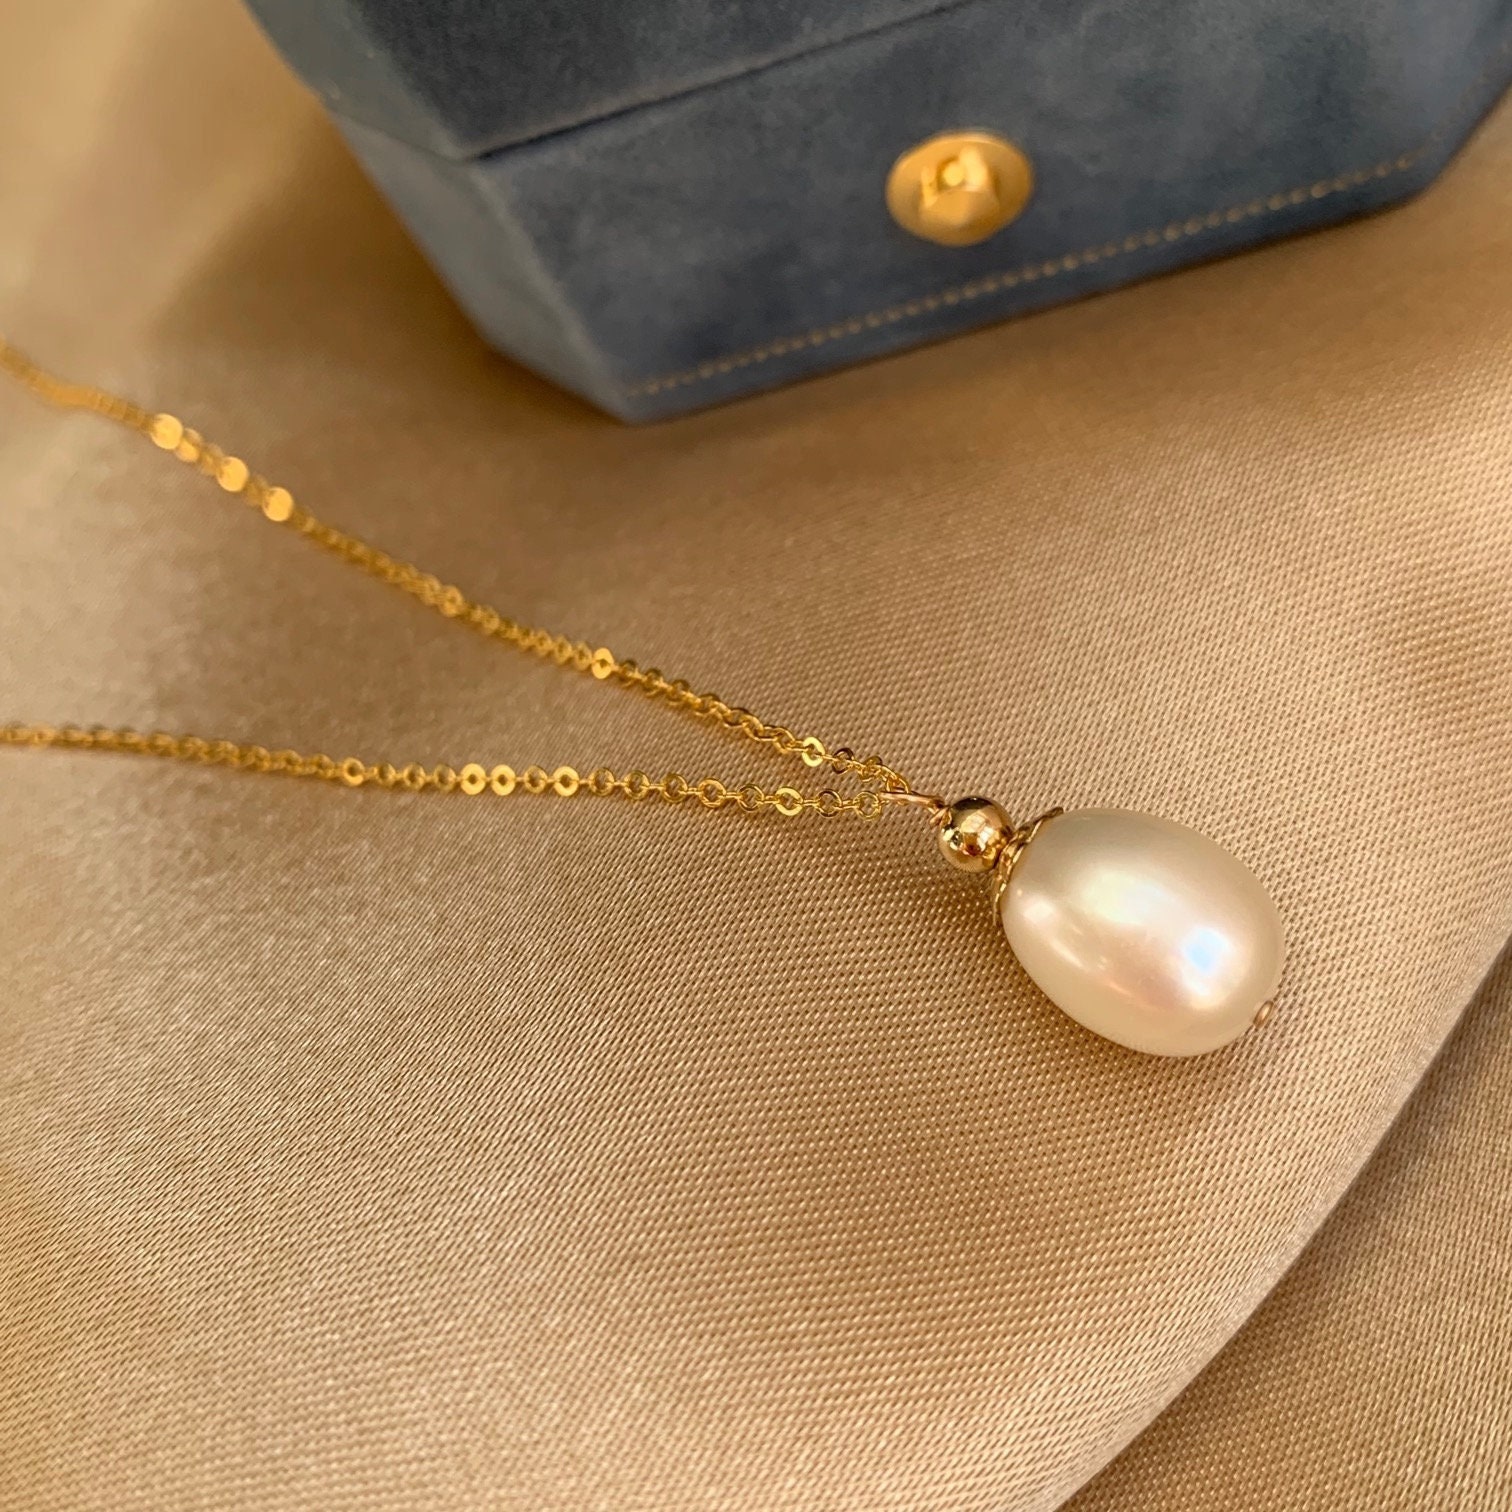 Single Teardrop White Pearl Pendant Necklace, 14K Gold Filled Genuine Freshwater Perfume Bottle Gift For Her